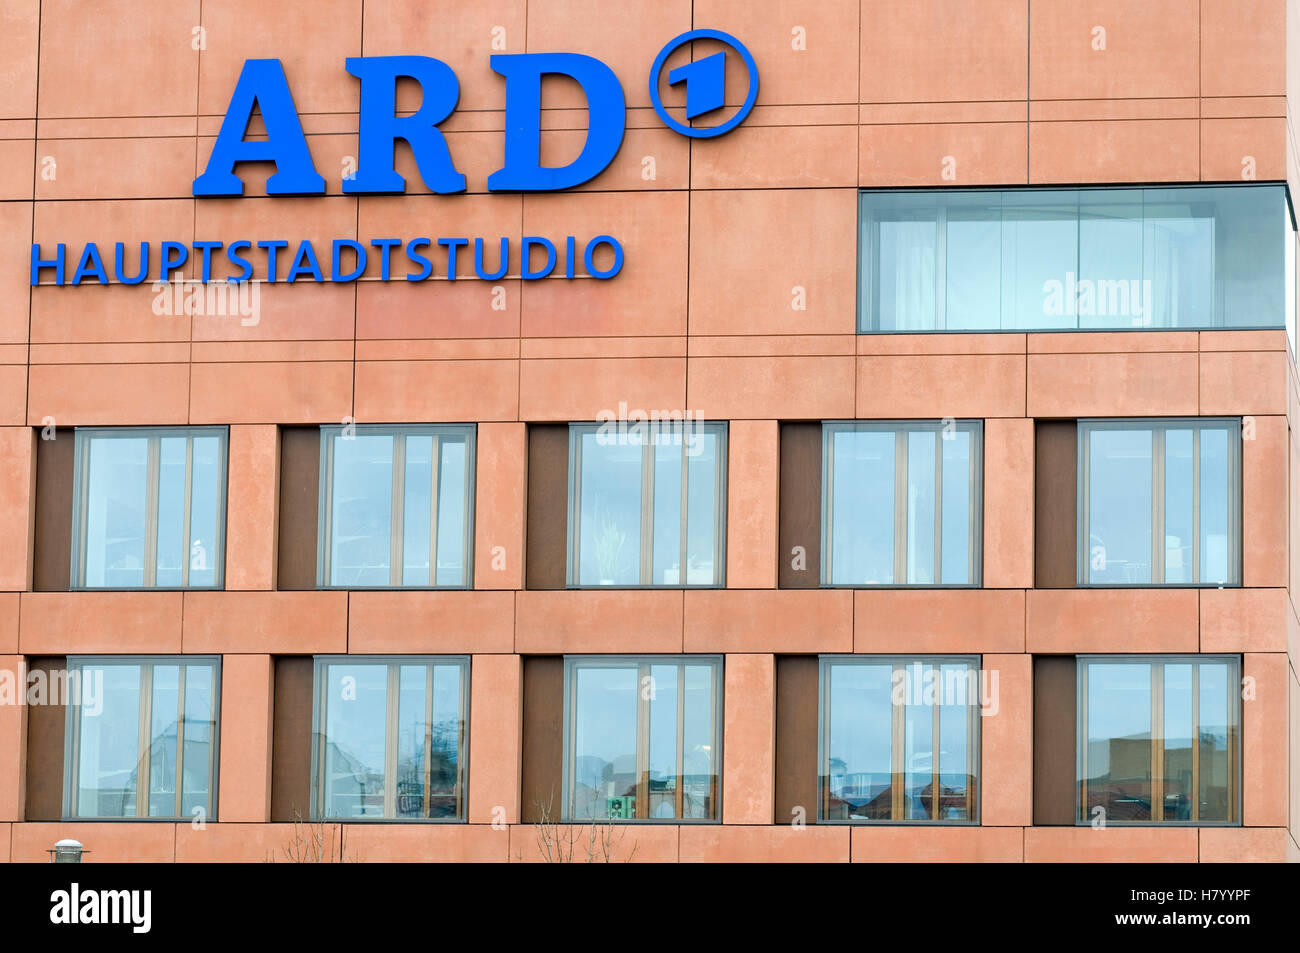 Facade of the ARD main studio, Berlin Stock Photo